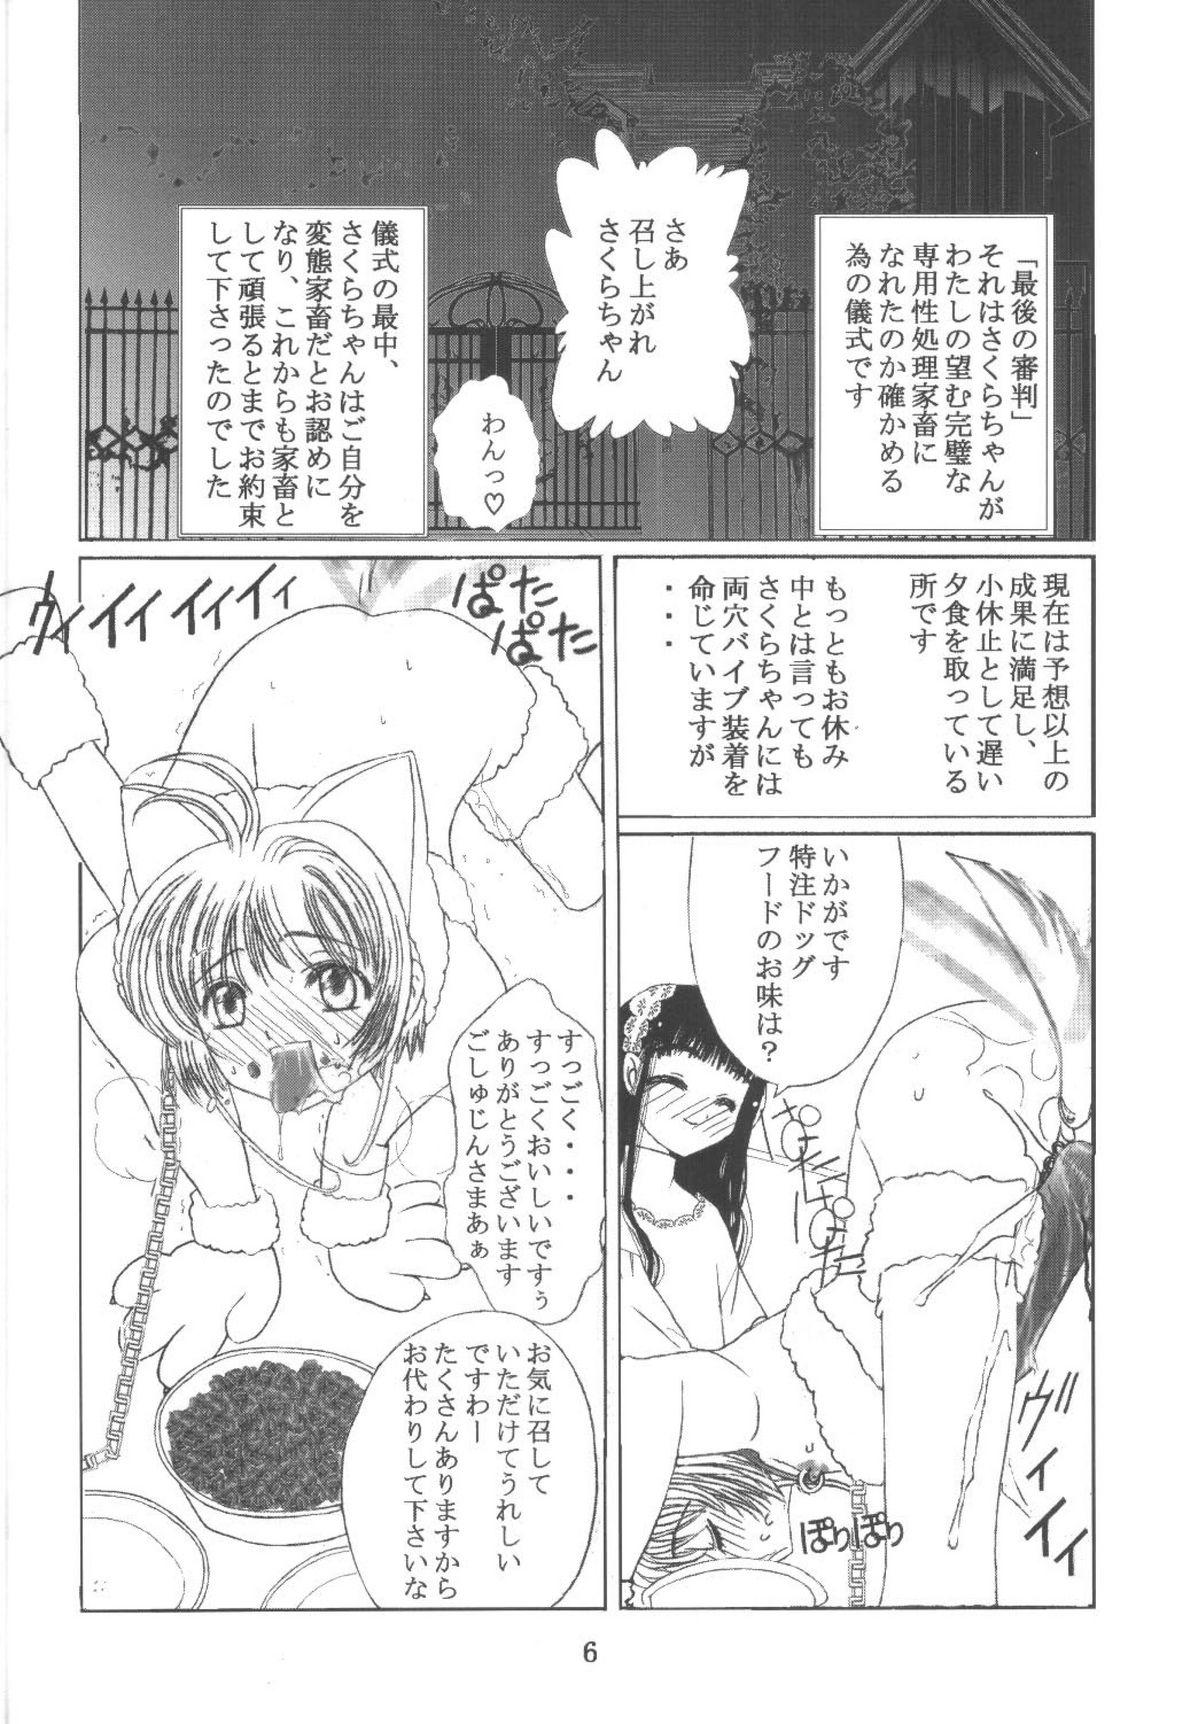 Masseur Kuuronziyou 11 Sakura-chan de Asobou 6 - Cardcaptor sakura X - Page 6